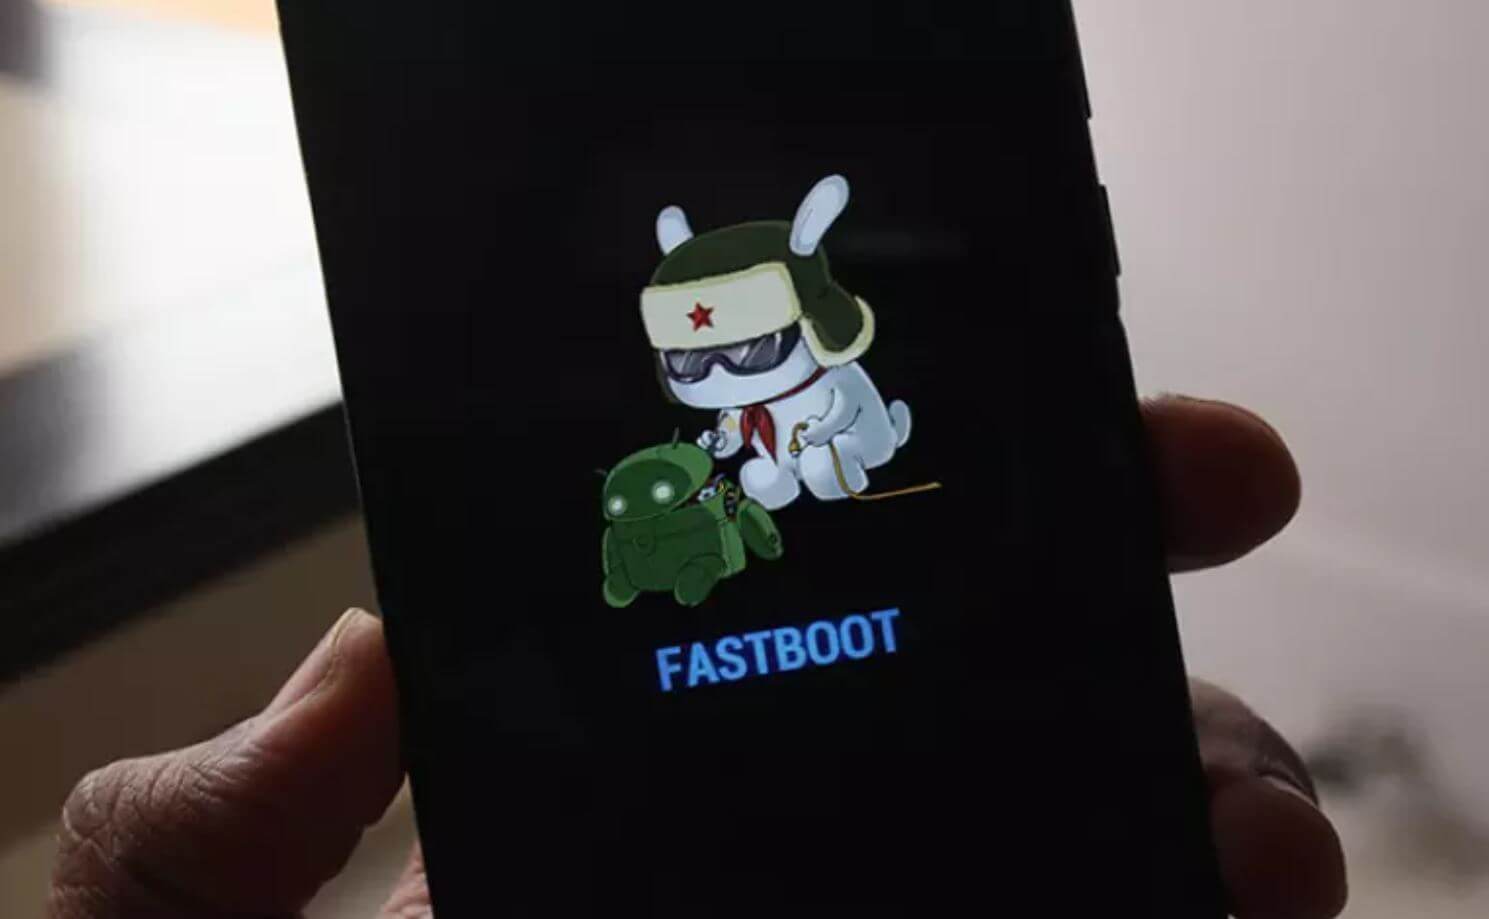 Redmi note 8 fastboot. Xiaomi заяц Fastboot. Xiaomi Redmi Note 8 Pro Fastboot. Fastboot Redmi Note 8. Заяц андроид Fastboot.